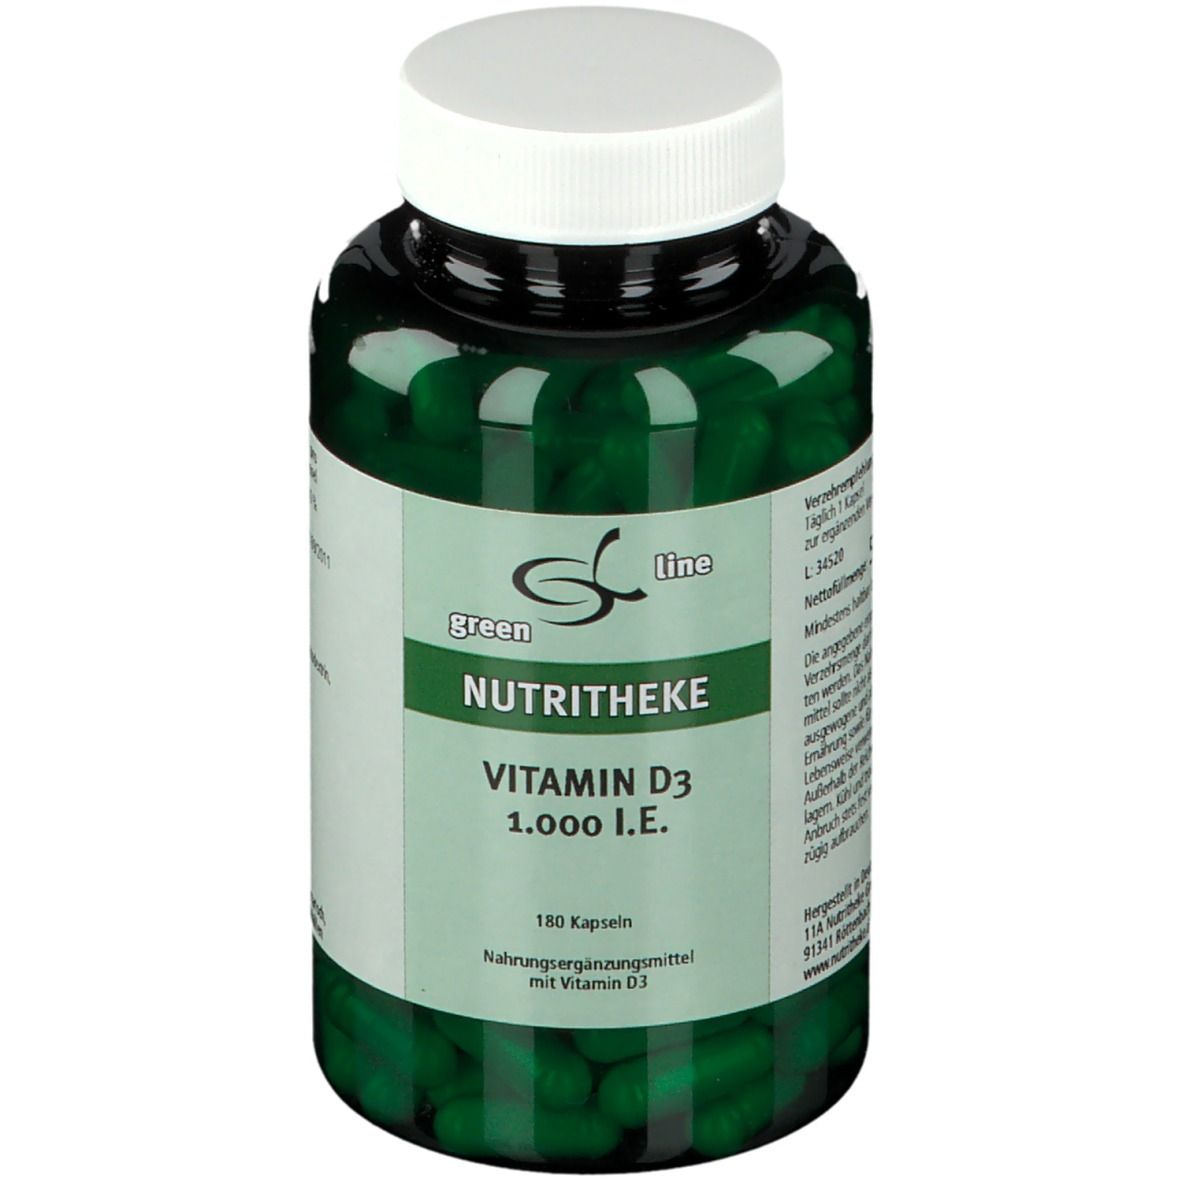 11 A Nutritheke GmbH green line Vitamin D3 1.000 I.e.